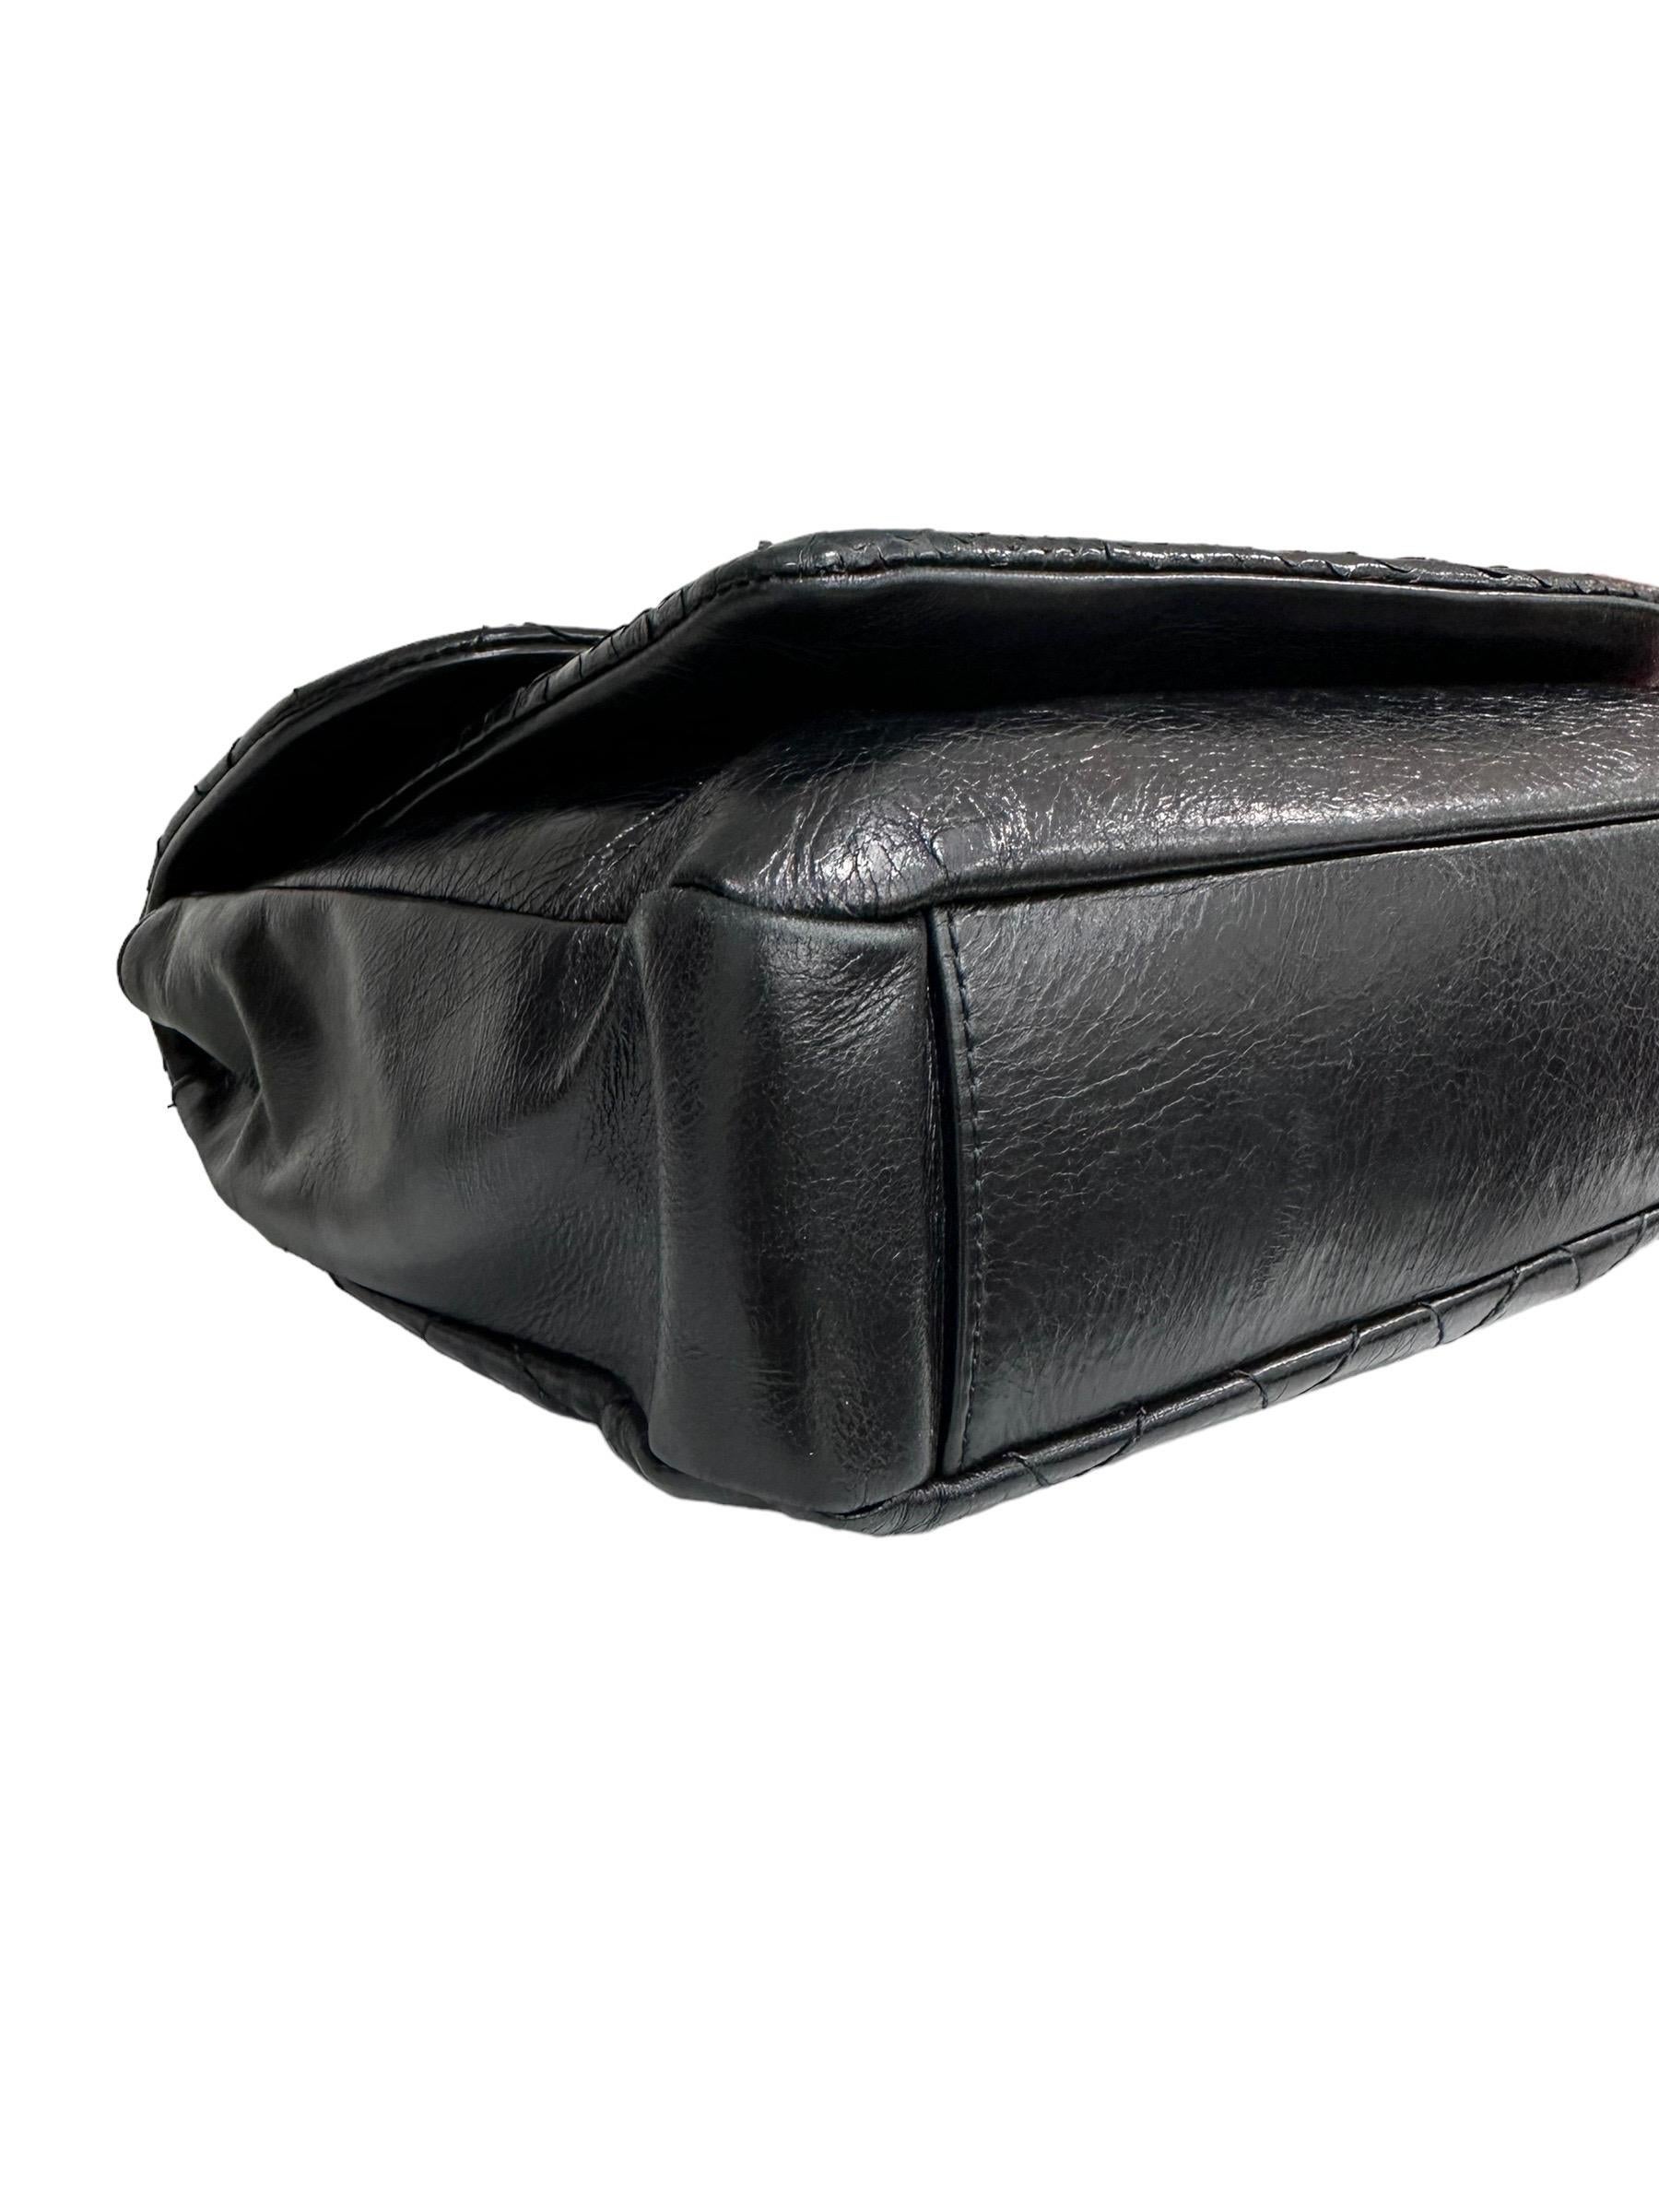 2016 Chanel Urban Mix  Flap Black Quilted Leather Shoulder Bag For Sale 4